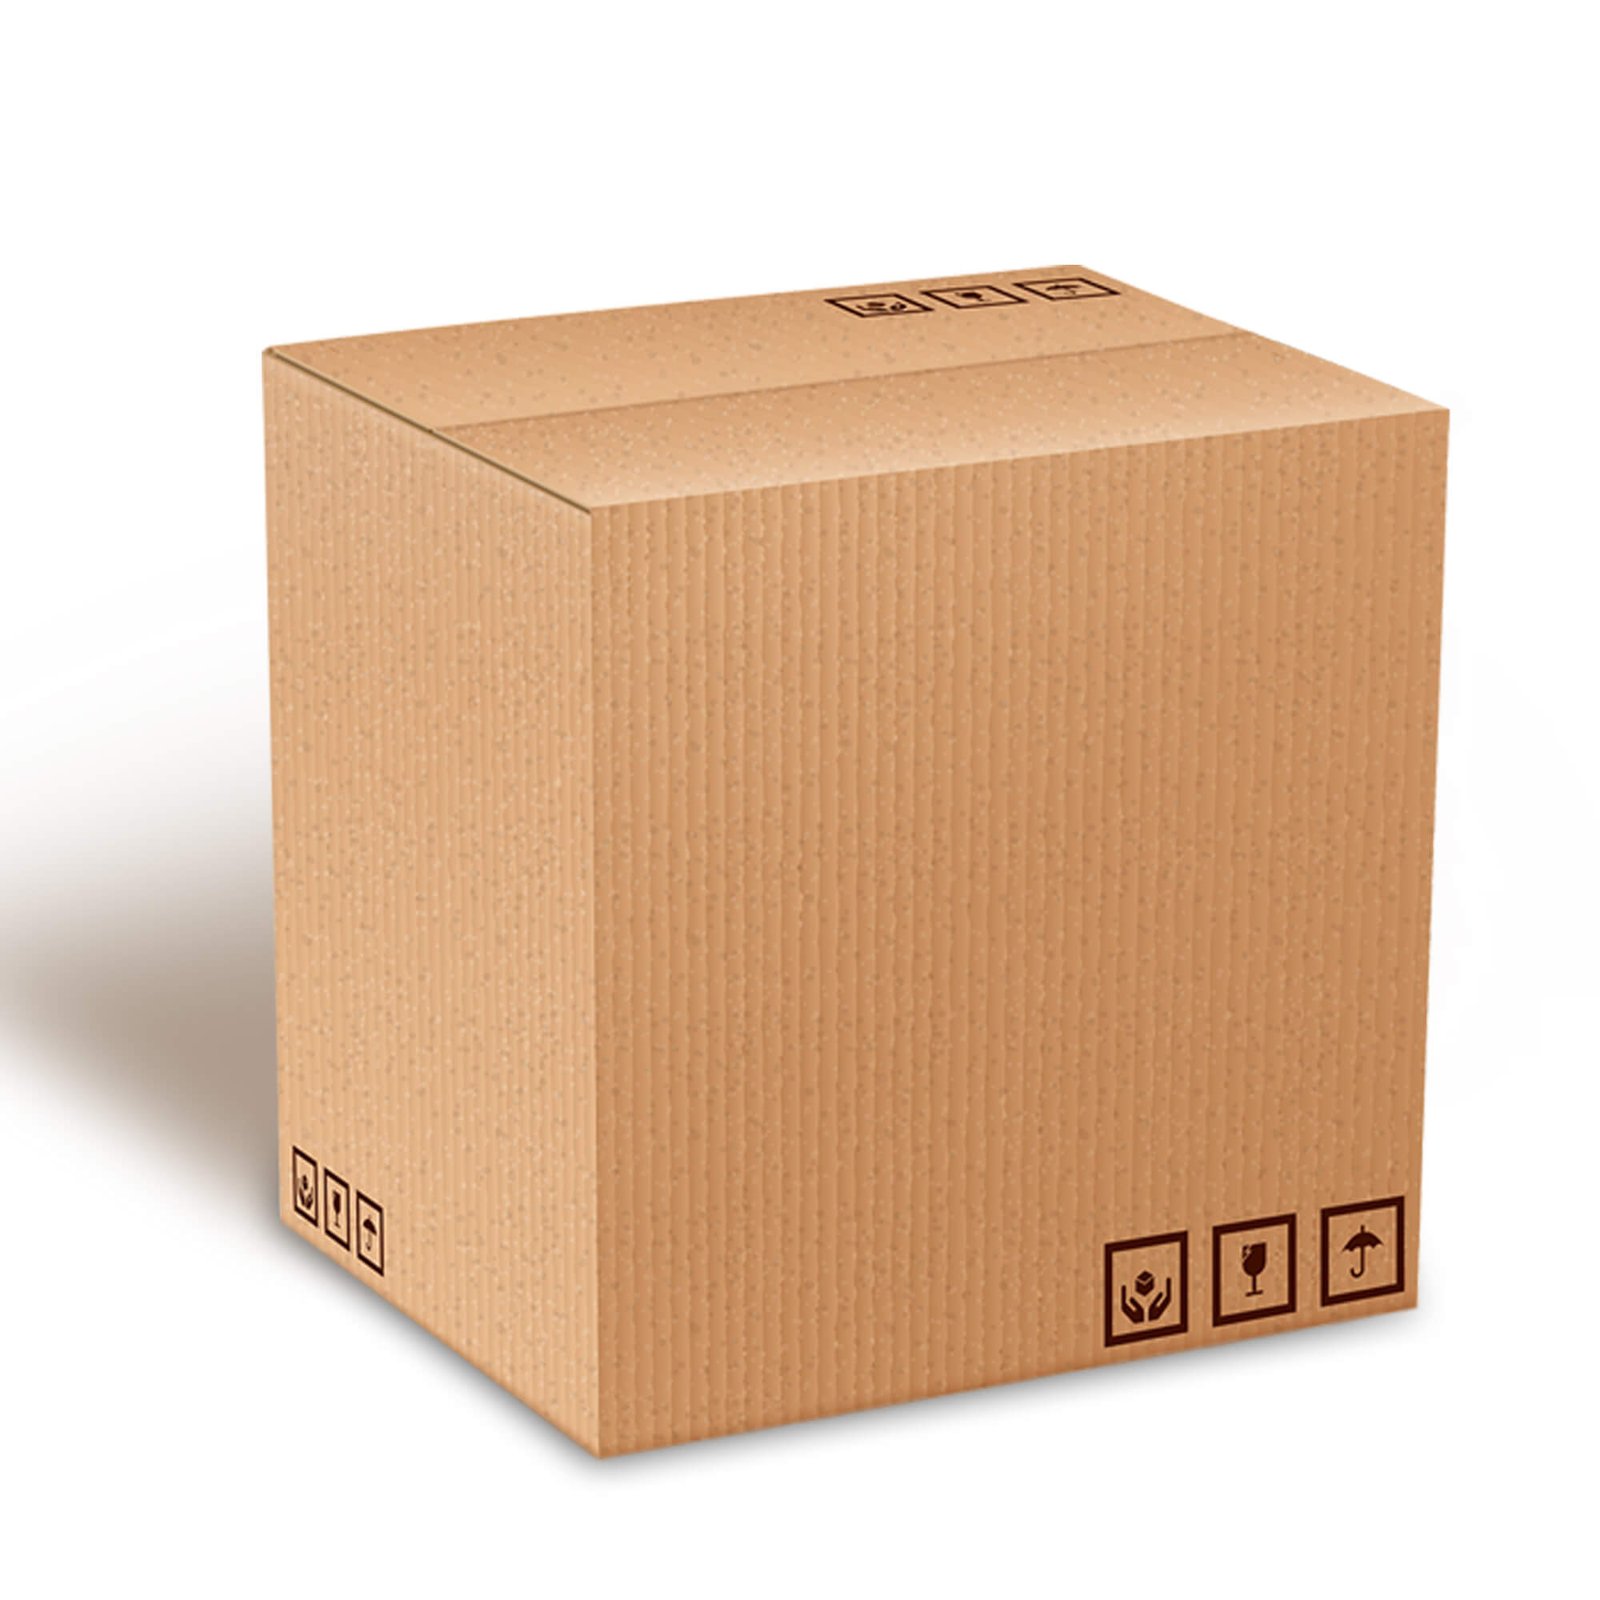 Download Free Delivery Box Mockup PSD Template - Mockup Den